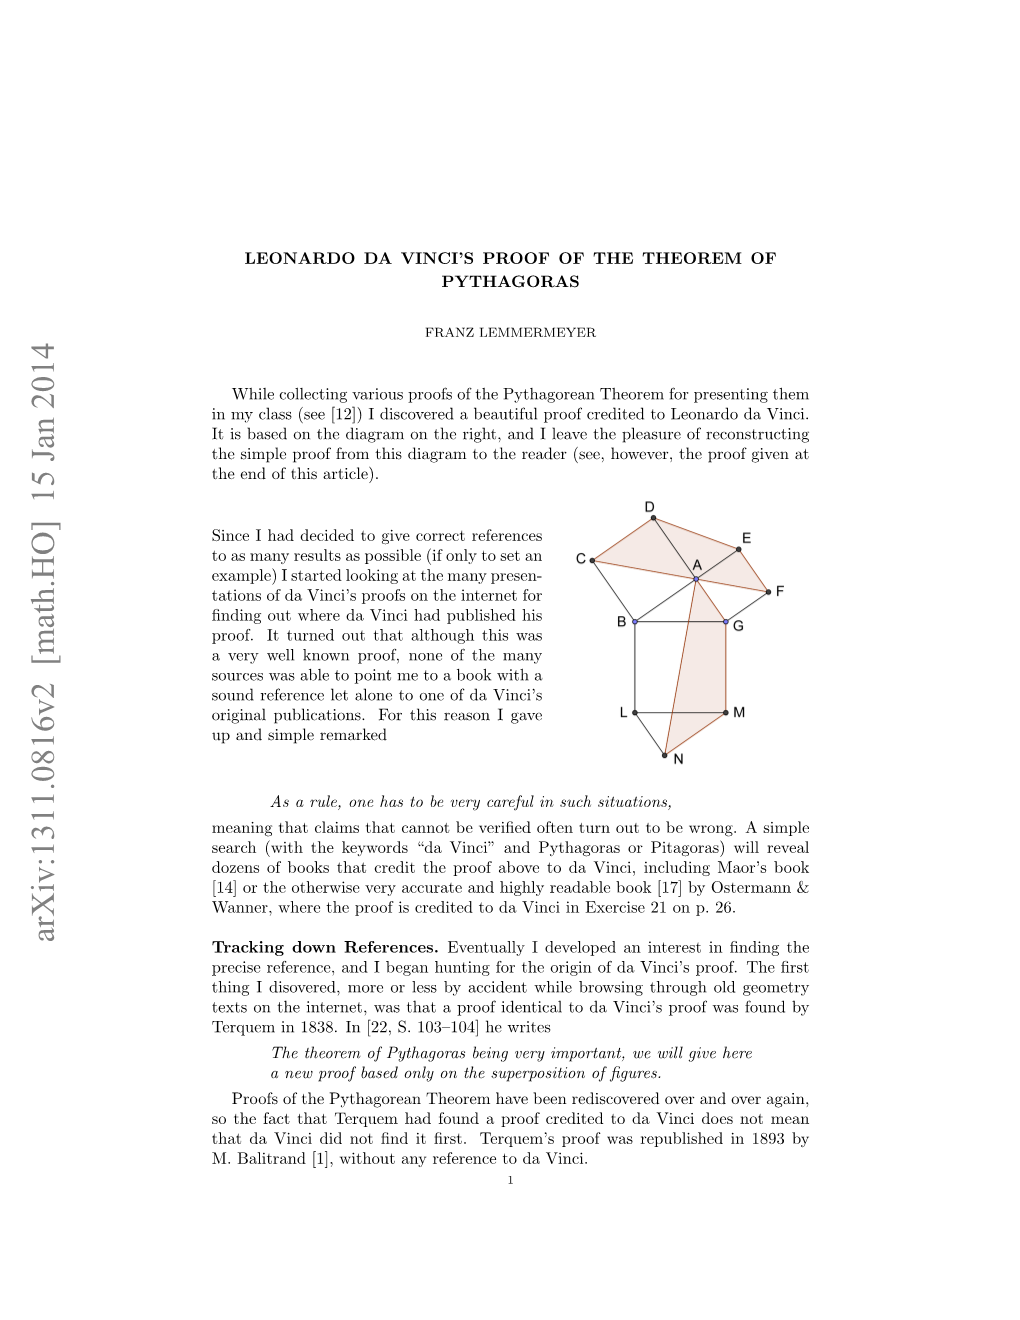 On Leonardo Da Vinci's Proof of the Theorem of Pythagoras